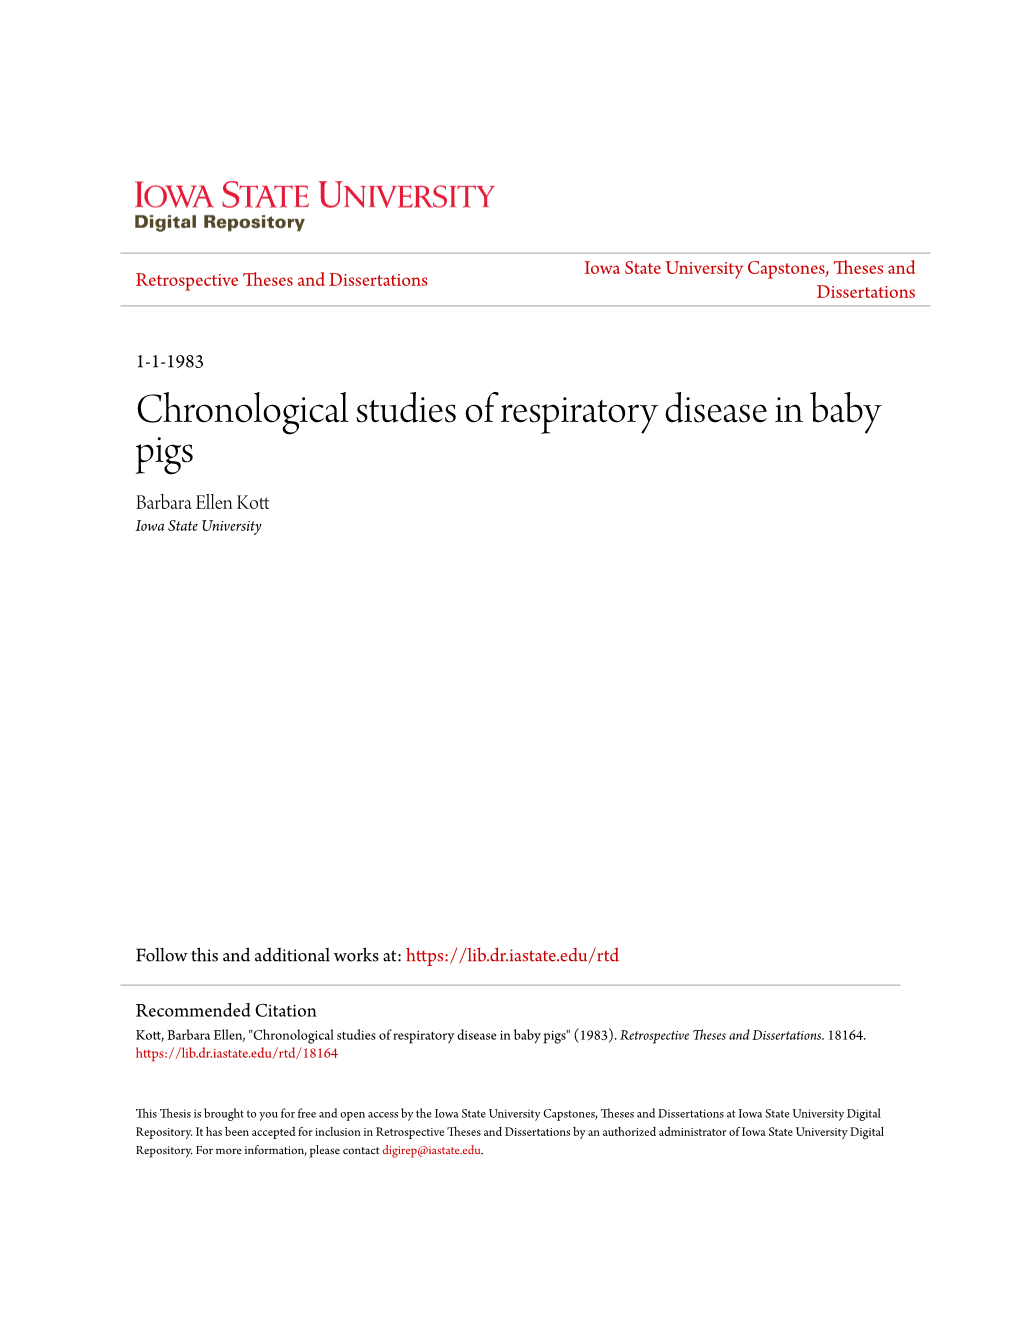 Chronological Studies of Respiratory Disease in Baby Pigs Barbara Ellen Kott Iowa State University